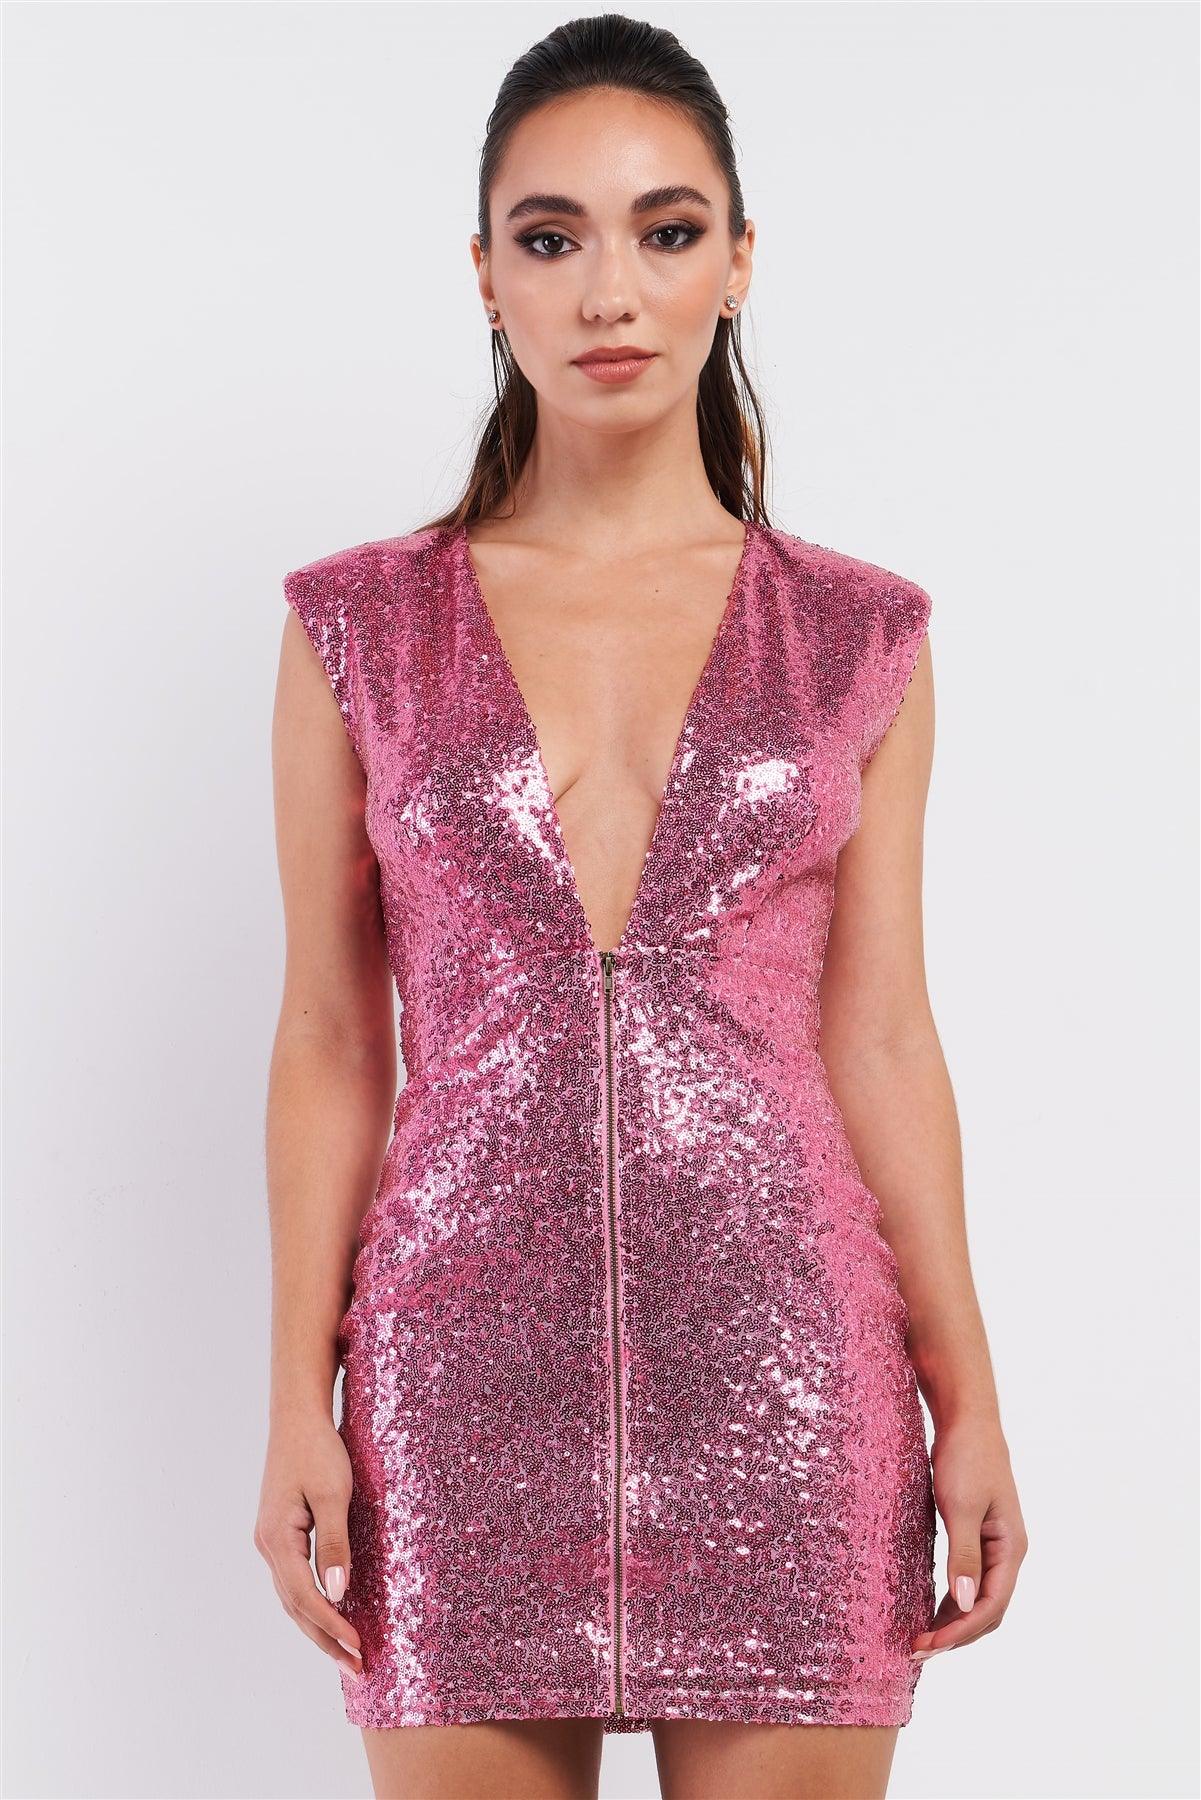 Shine Bright Like A Diamond Pink Sequin Sleeveless Deep Plunge V-Neck Front Zip-Up Detail Mini Dress /3-2-1